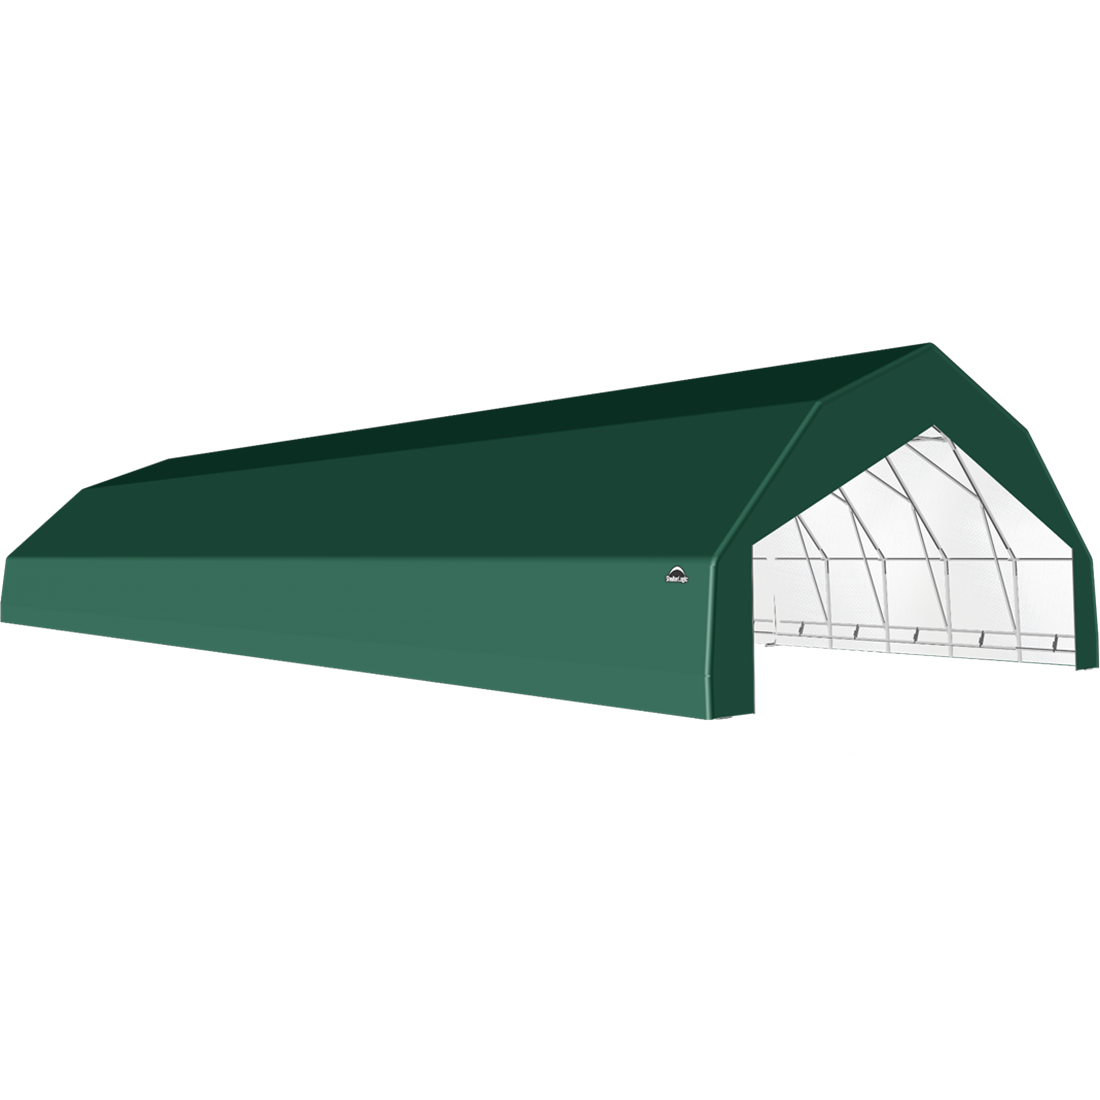 ShelterTech SP Series Barn Shelter, 30 ft. x 80 ft. x 15 ft. Heavy Duty PVC 14.5 oz. Green